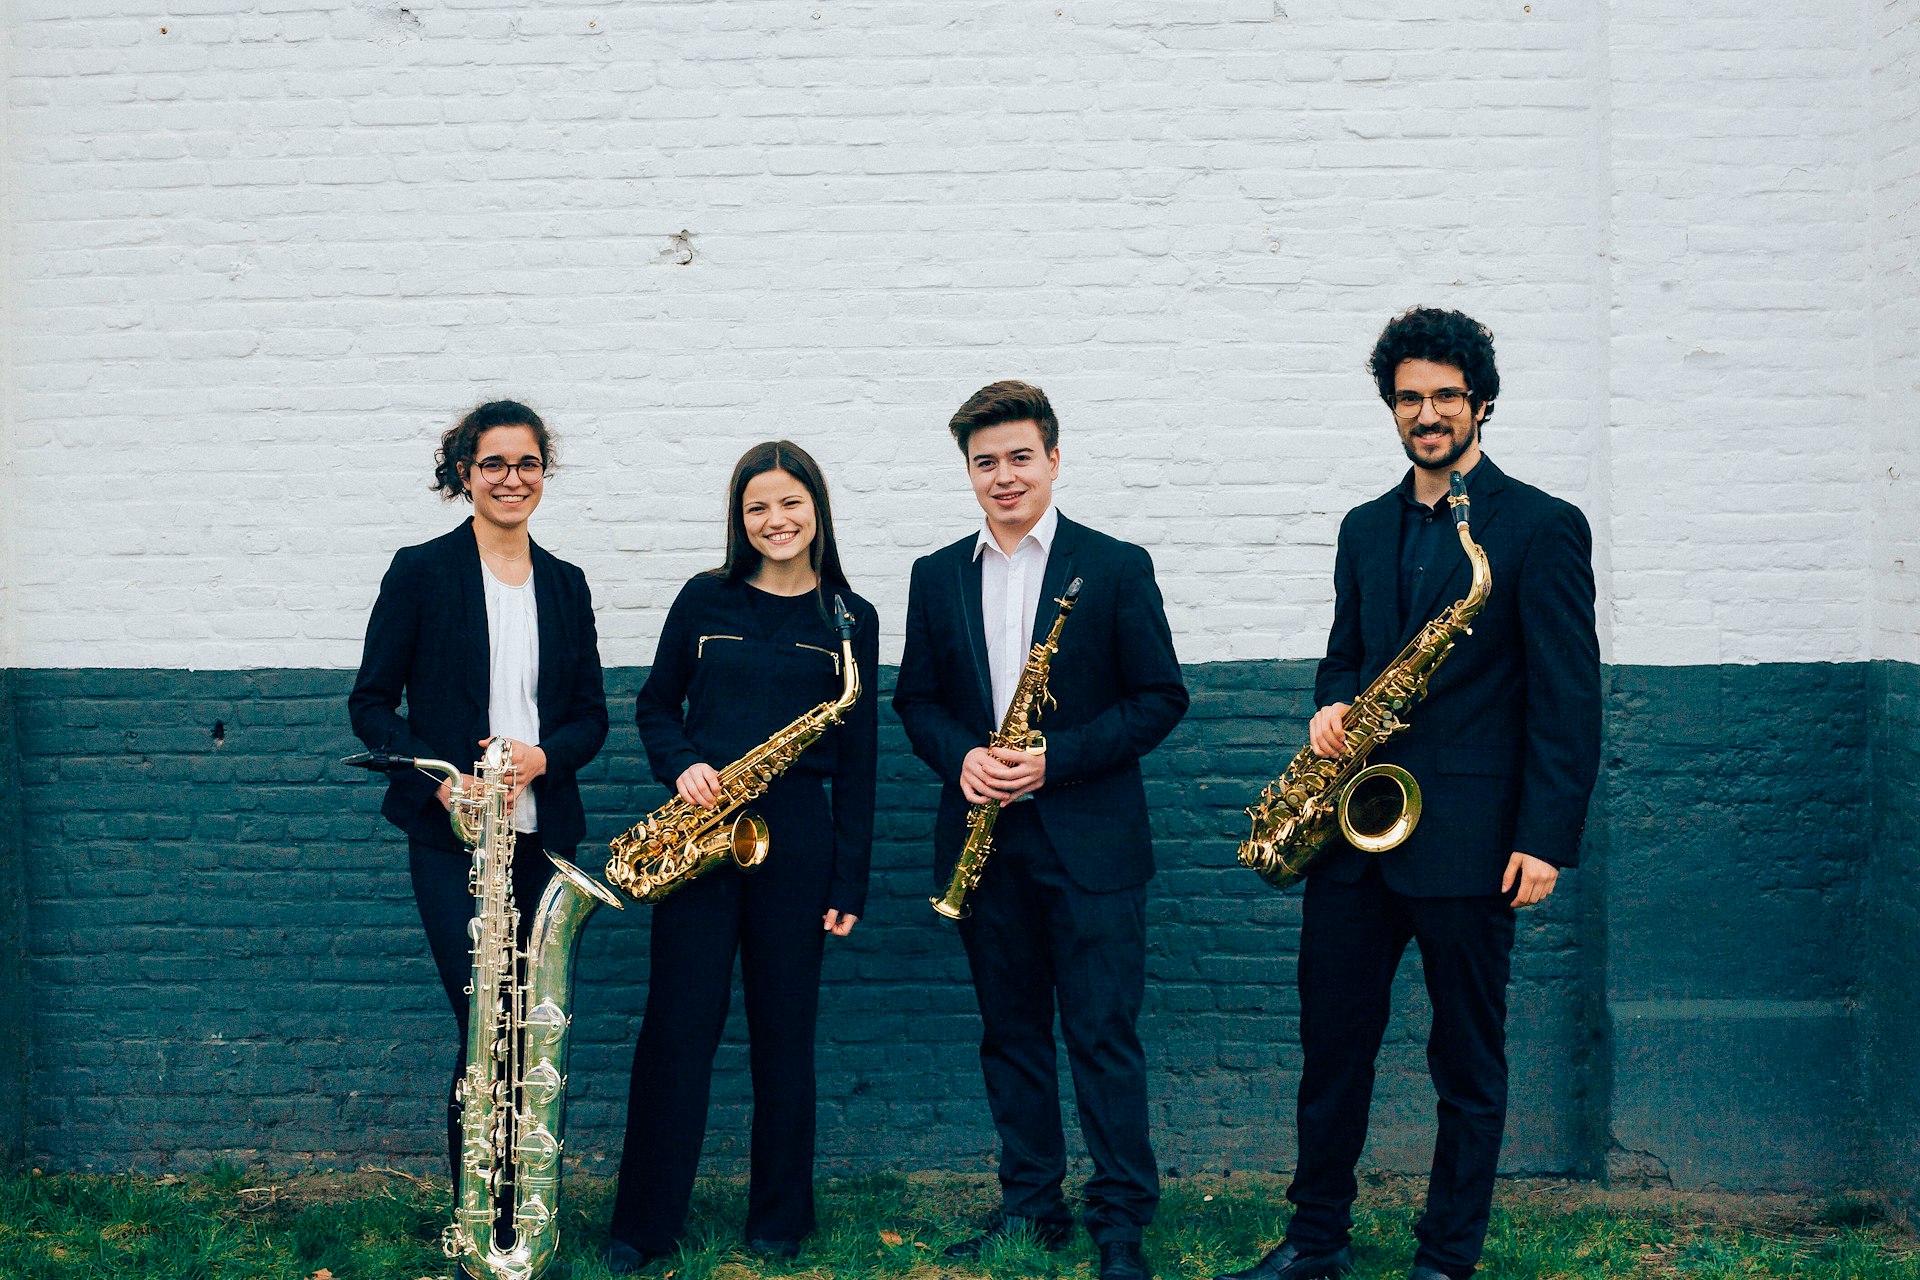 Maat Saxophone Quartet